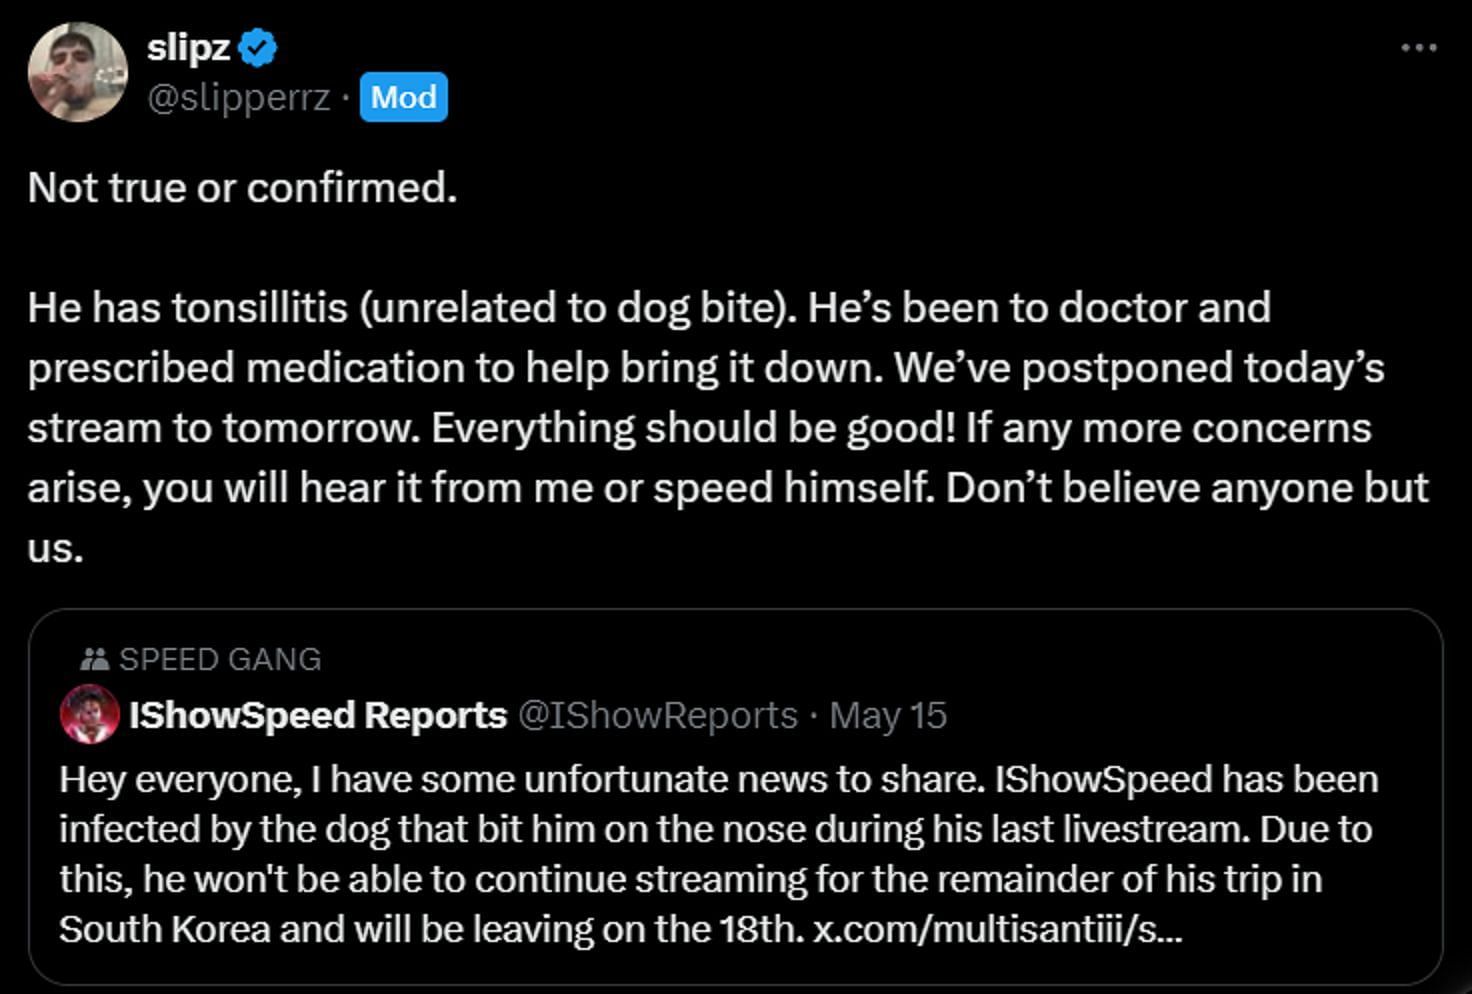 Slipz dismisses rumors of streamer getting infected due to dog bite (Image via X)